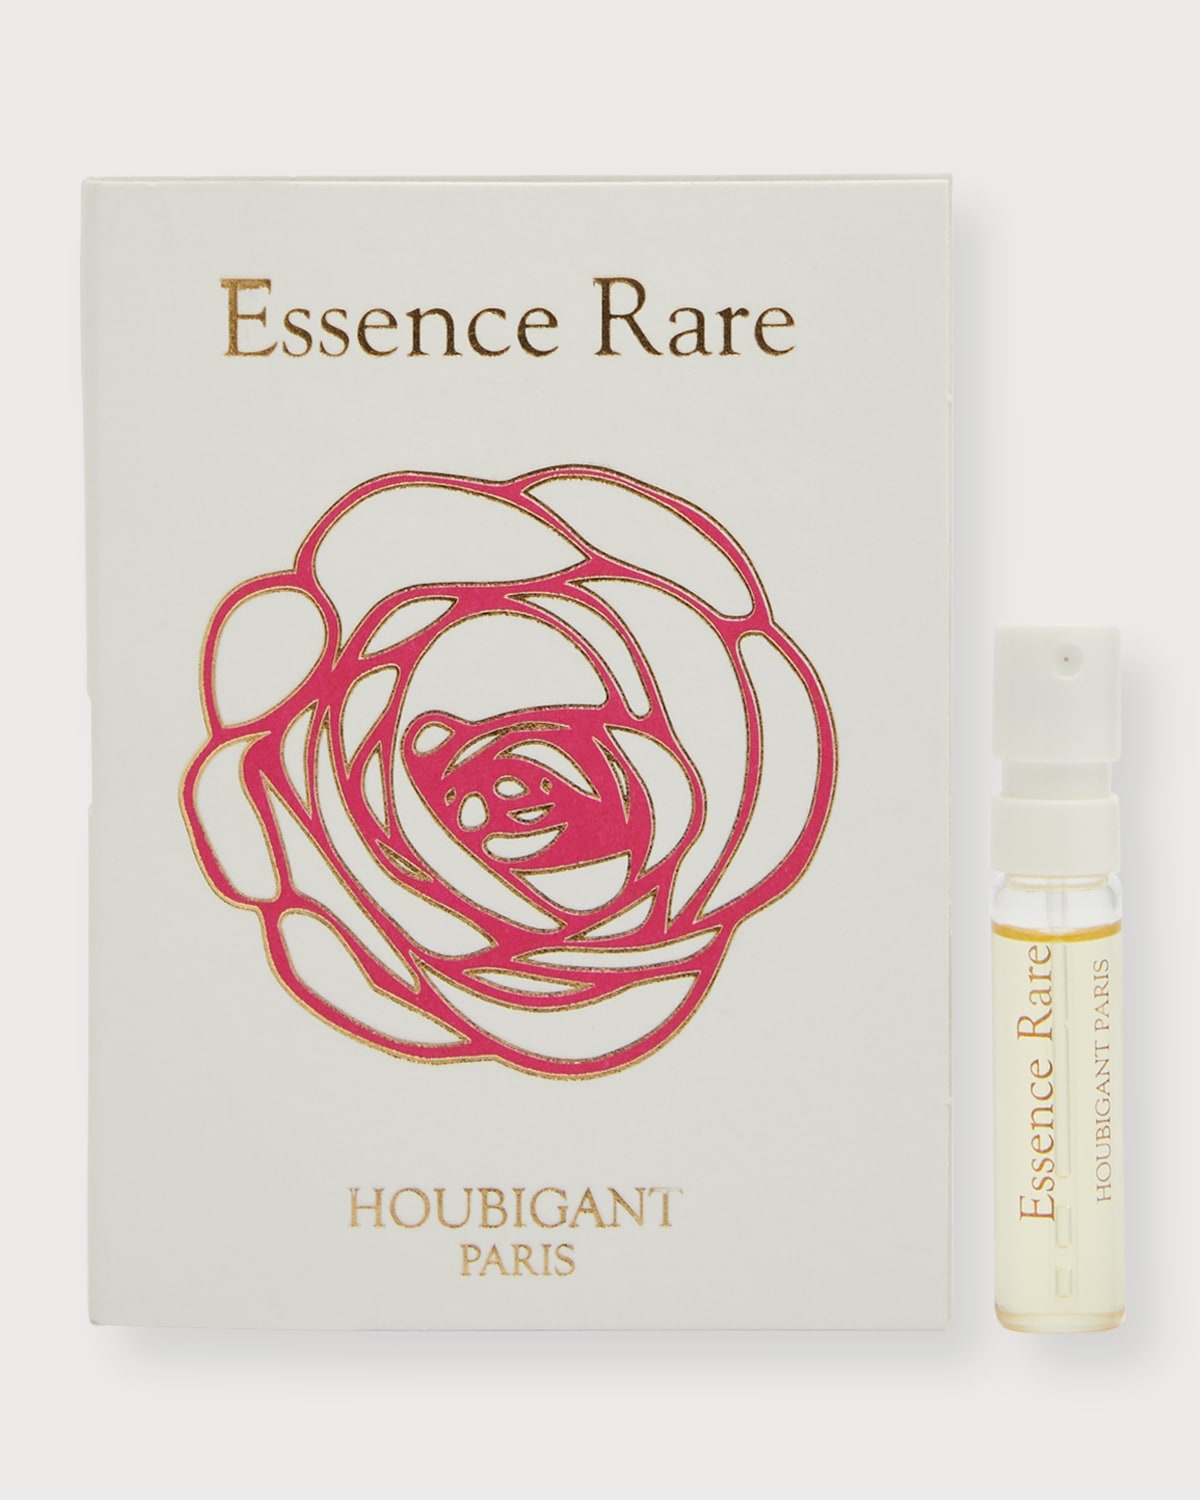 Essence Rare Eau de Parfum Extreme, 2 mL - Yours with any $285 Houbigant Paris Purchase